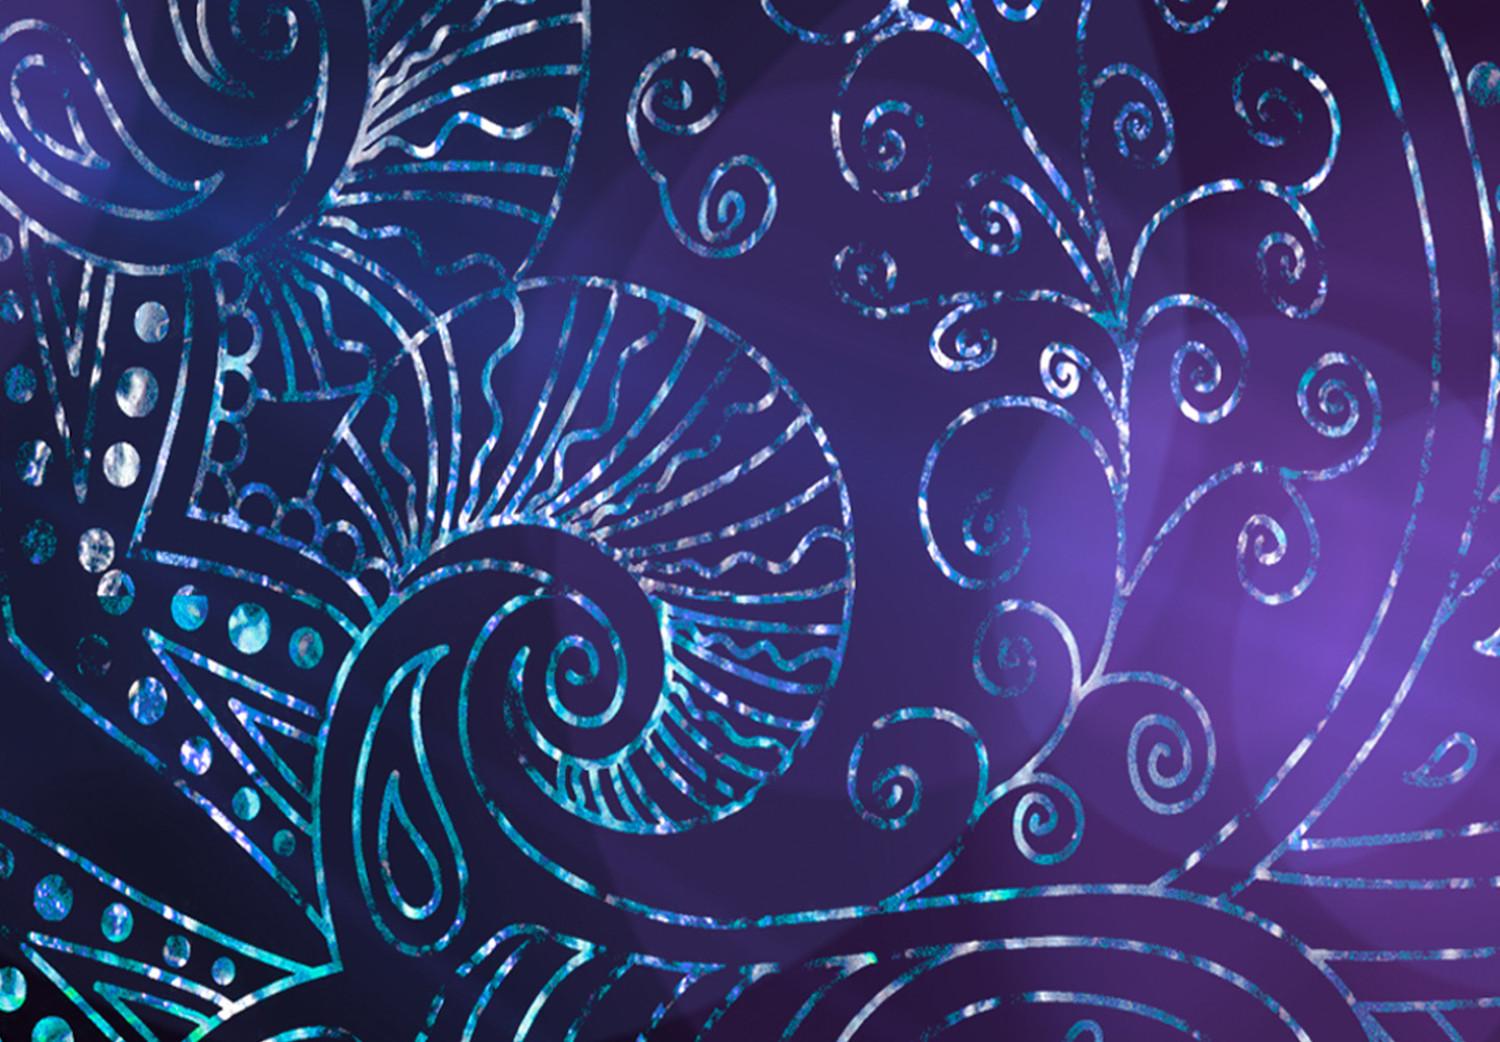 Cuadro Ornamento fluorescente - abstracto con patrón azul y púrpura